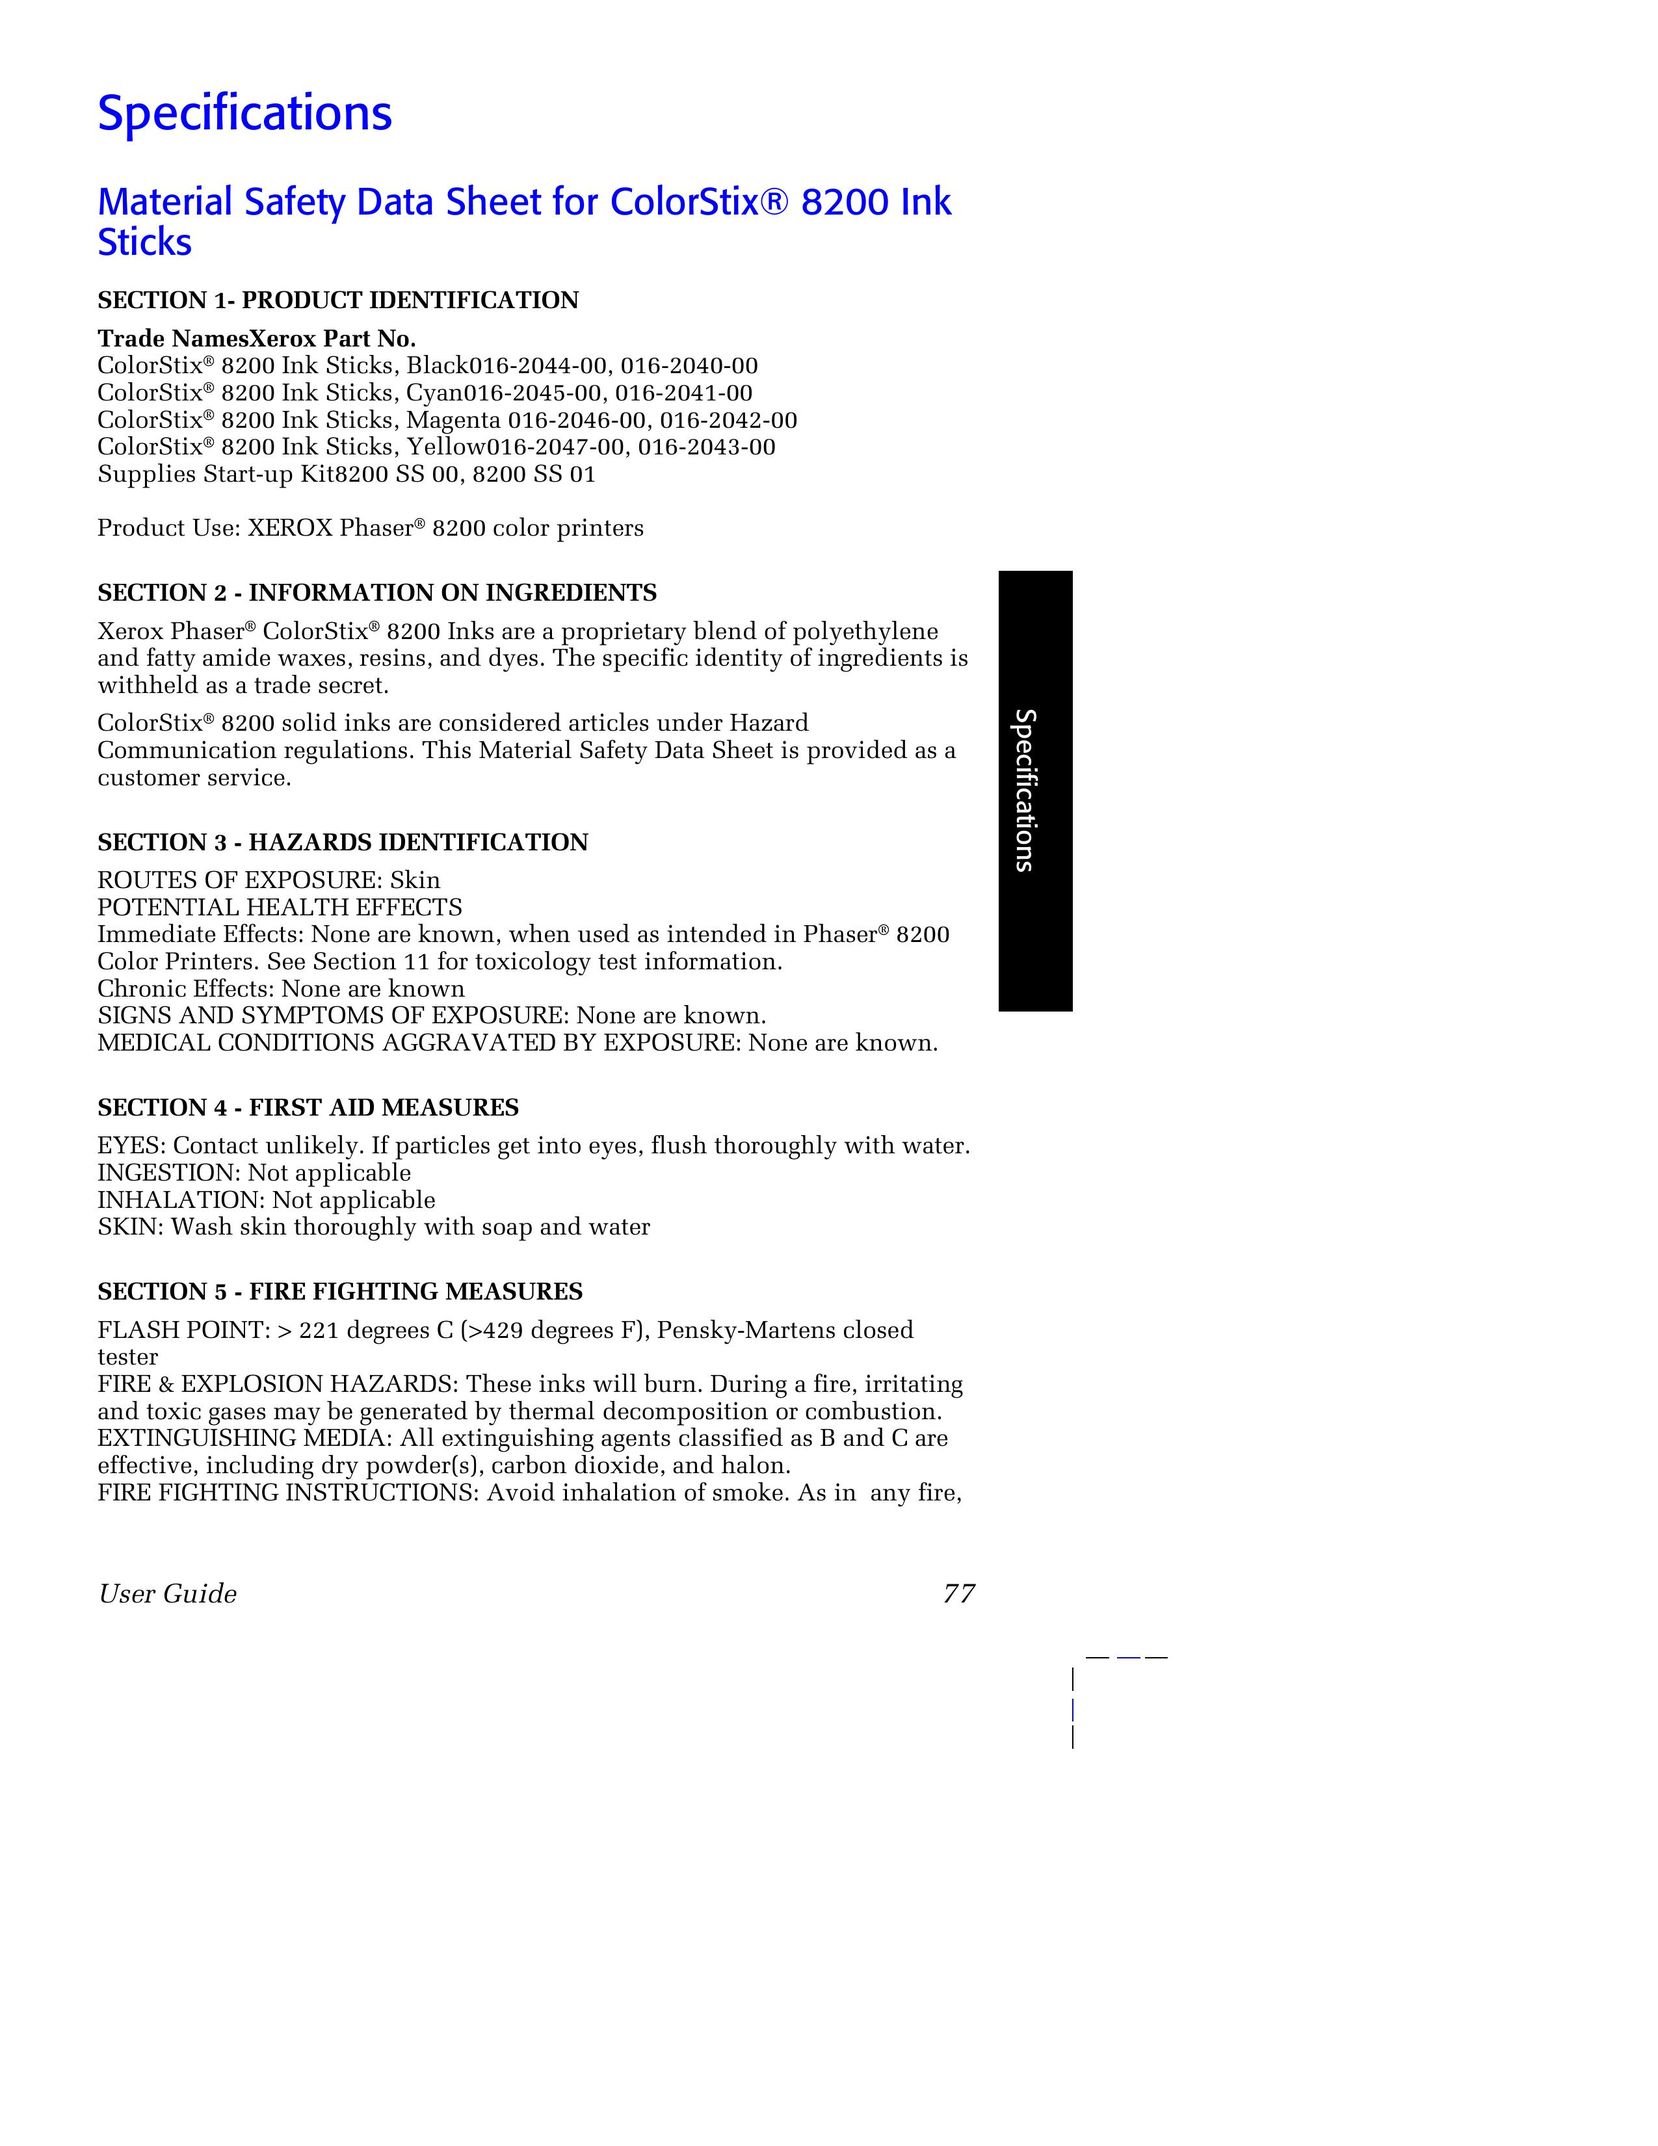 Xerox 016-2043-00 Printer Accessories User Manual